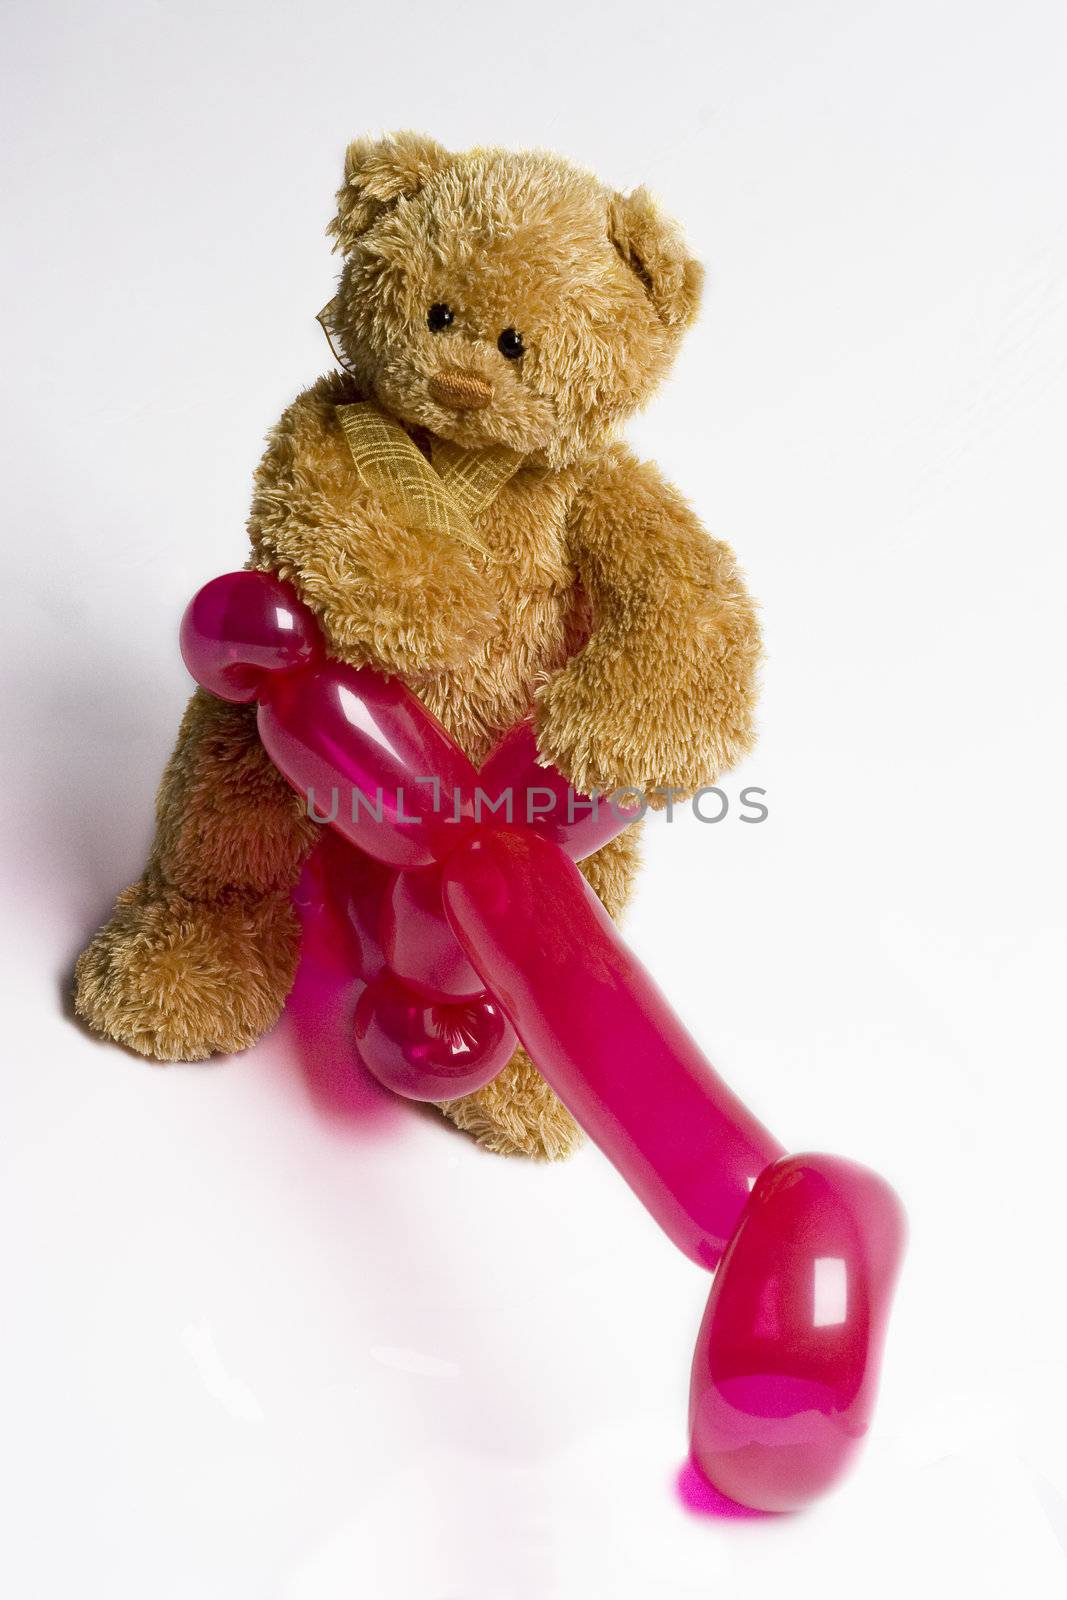 teddy bear sitting on a pink balloon bike